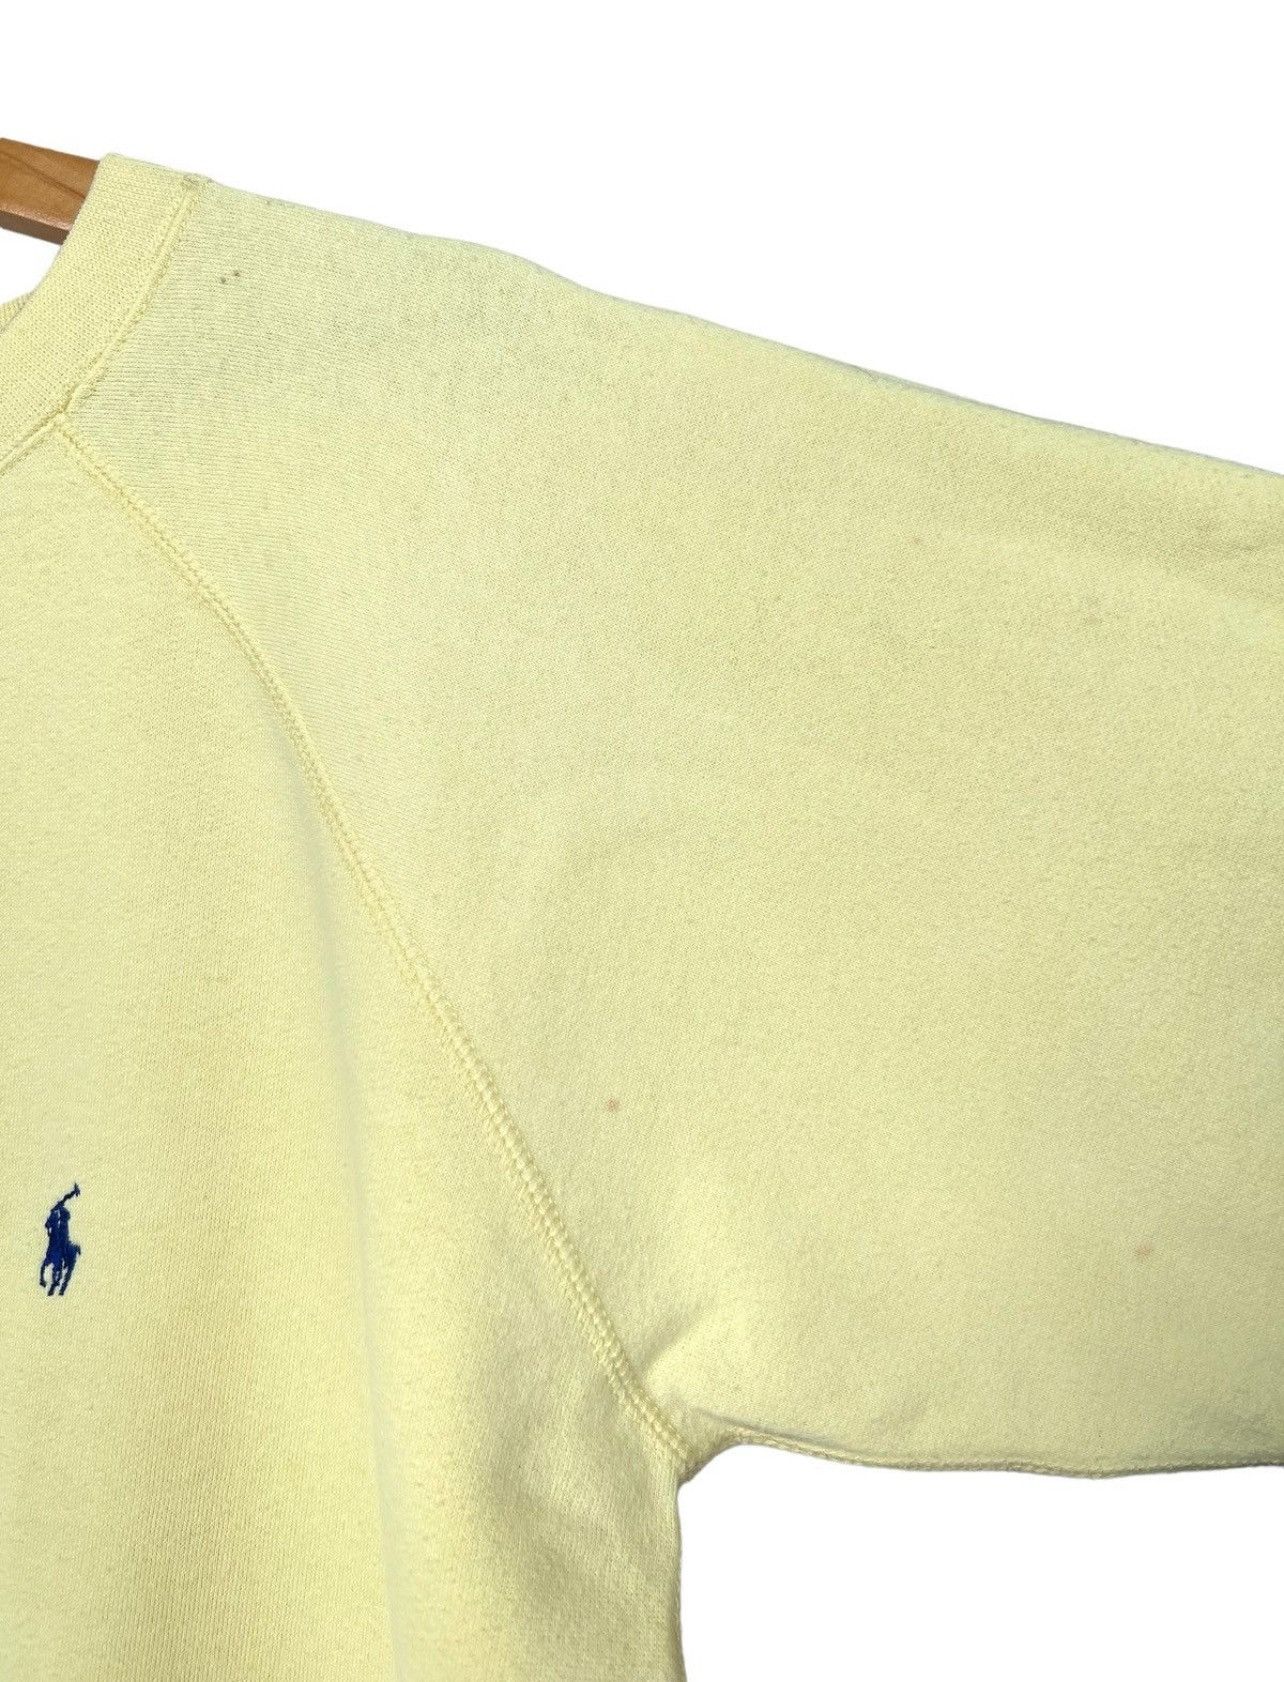 Vintage 90s Polo Ralph Lauren Small Pony Yellow Sweatshirt - 5